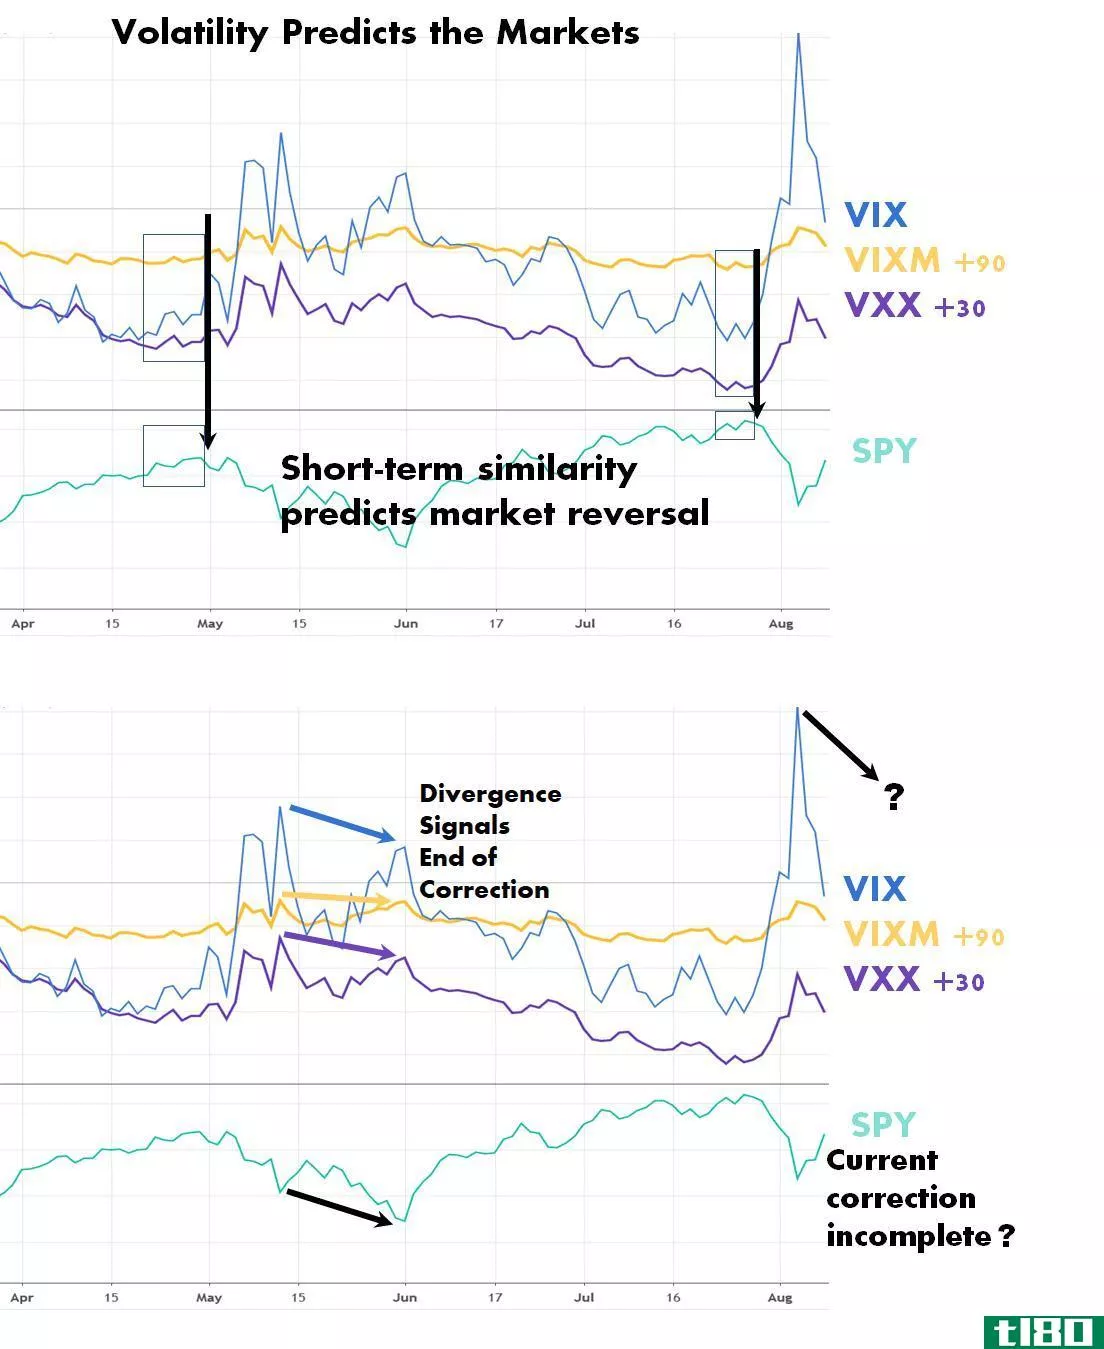 Charts showing volatility predicting market performance